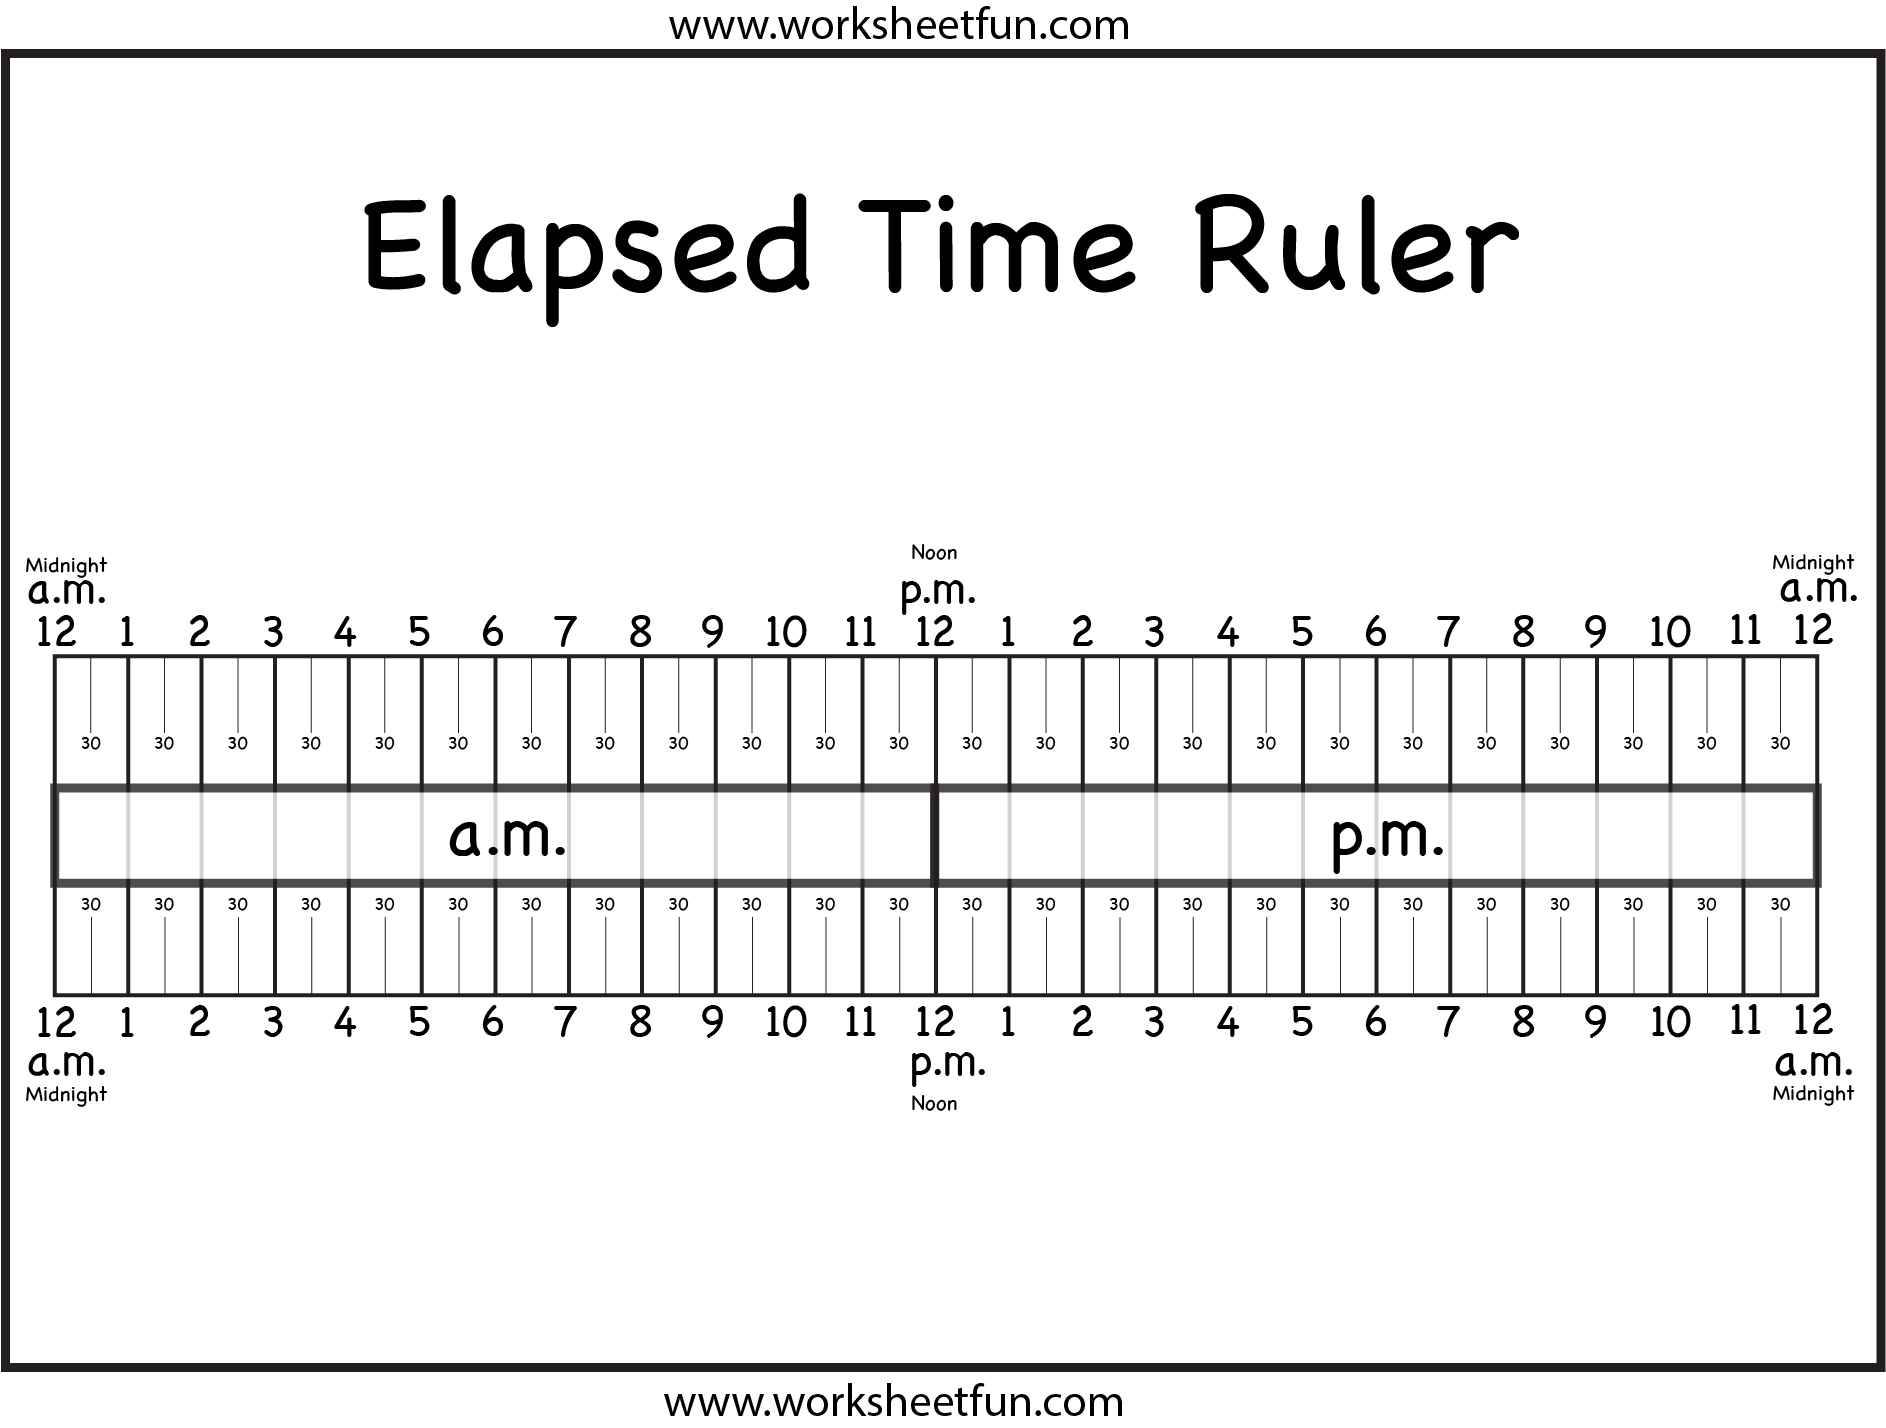 Elapsed Time Ruler Image